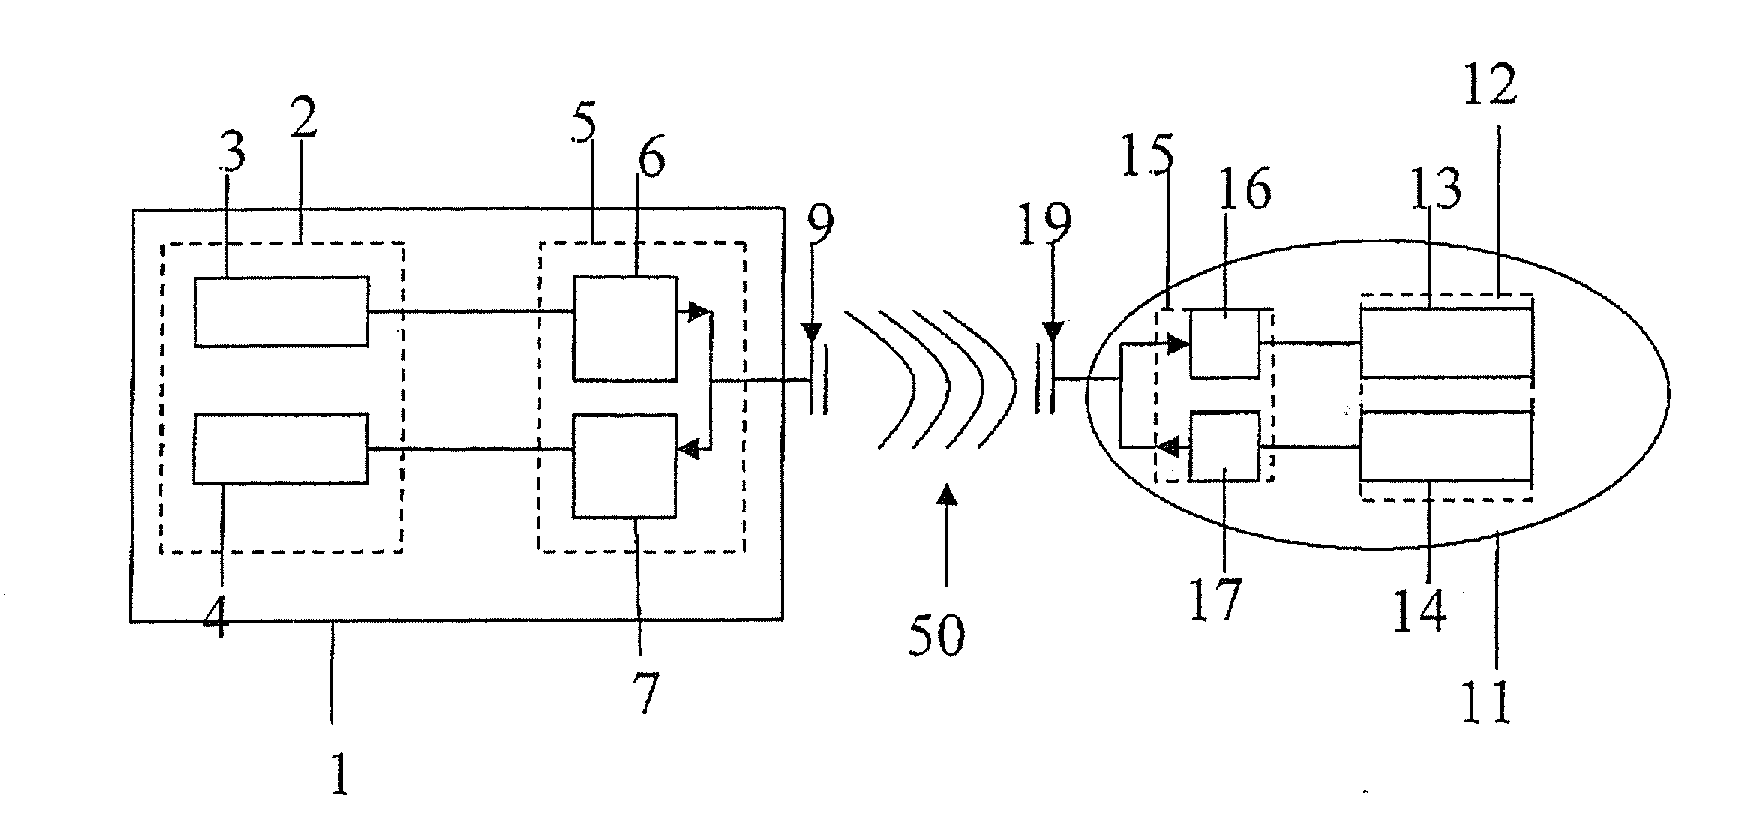 Am (amplitude modulation) demodulation system for RFID reader device